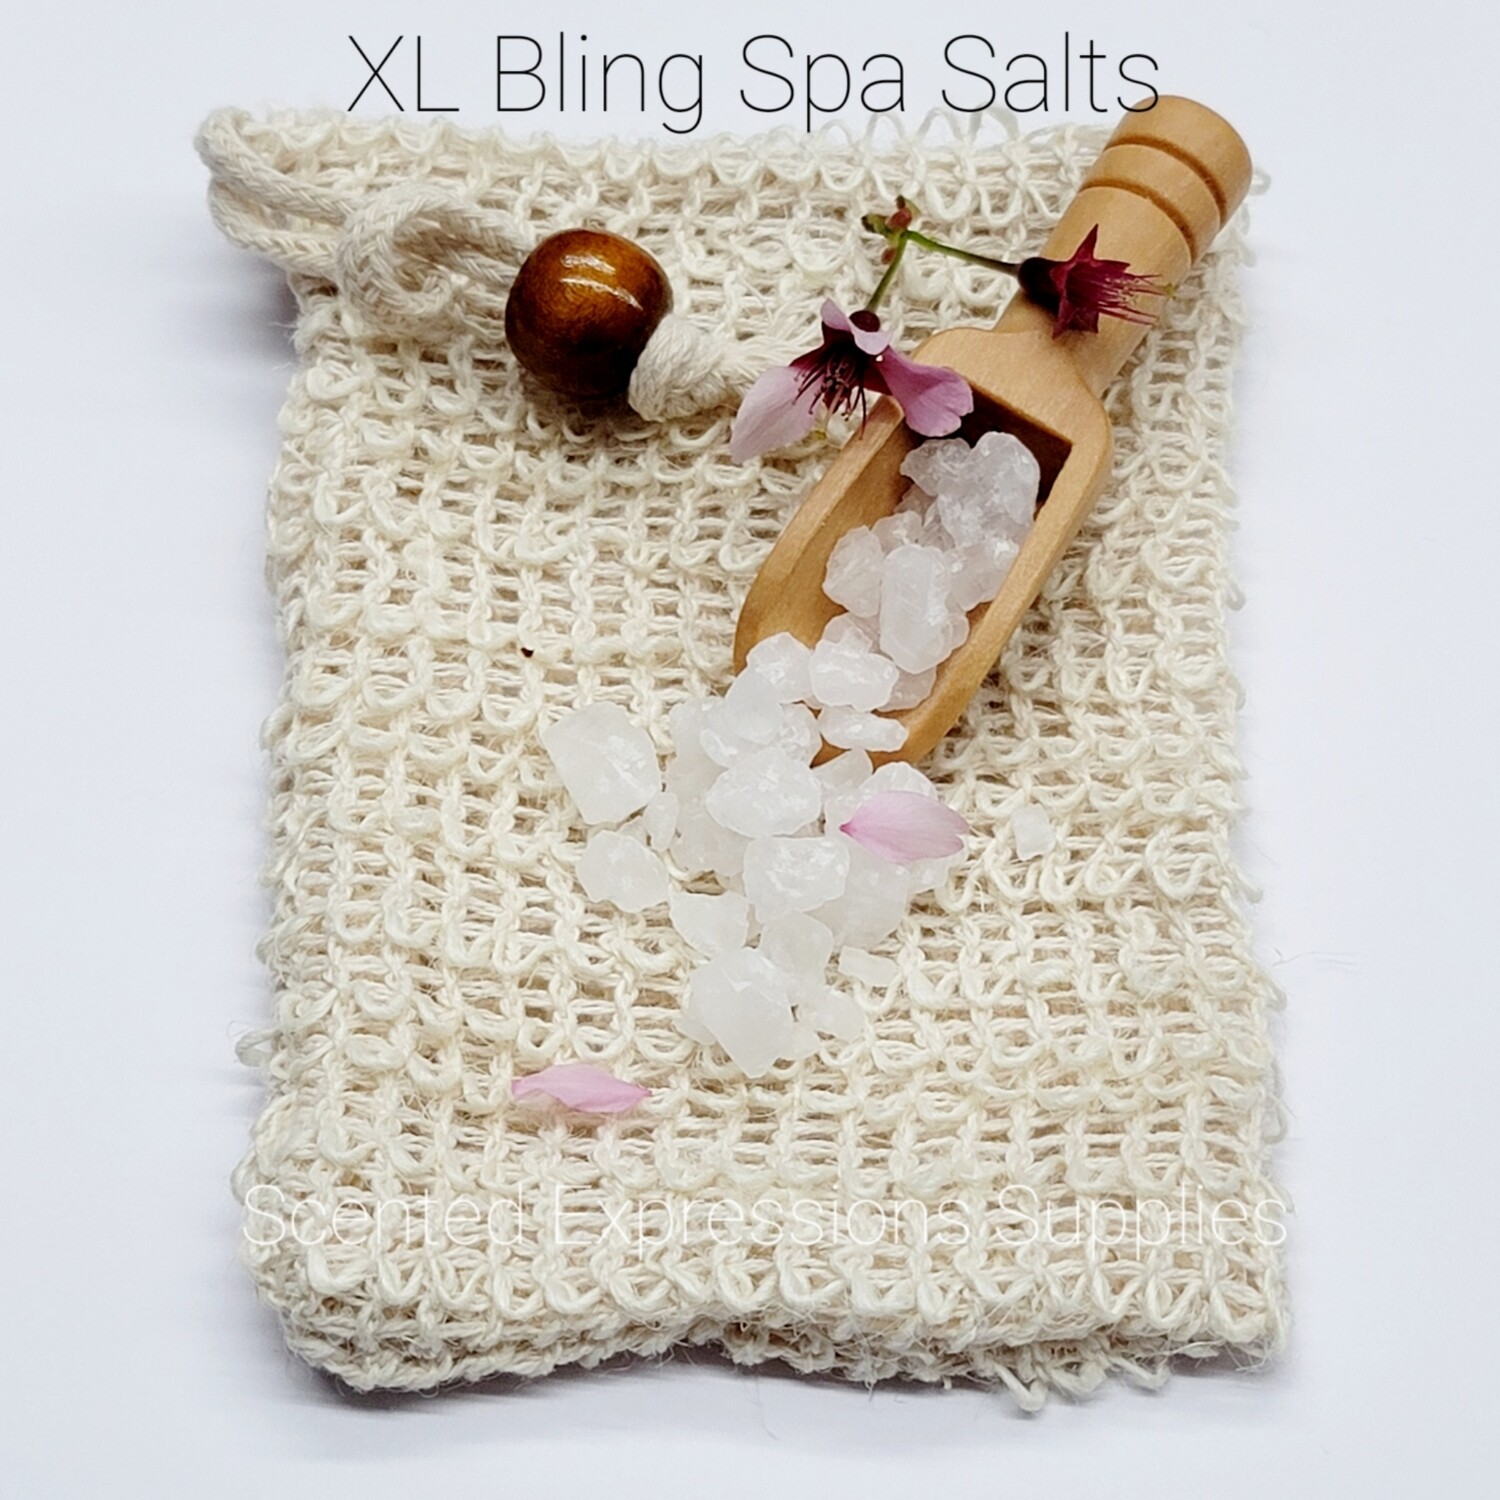 XL Bling Spa Salts